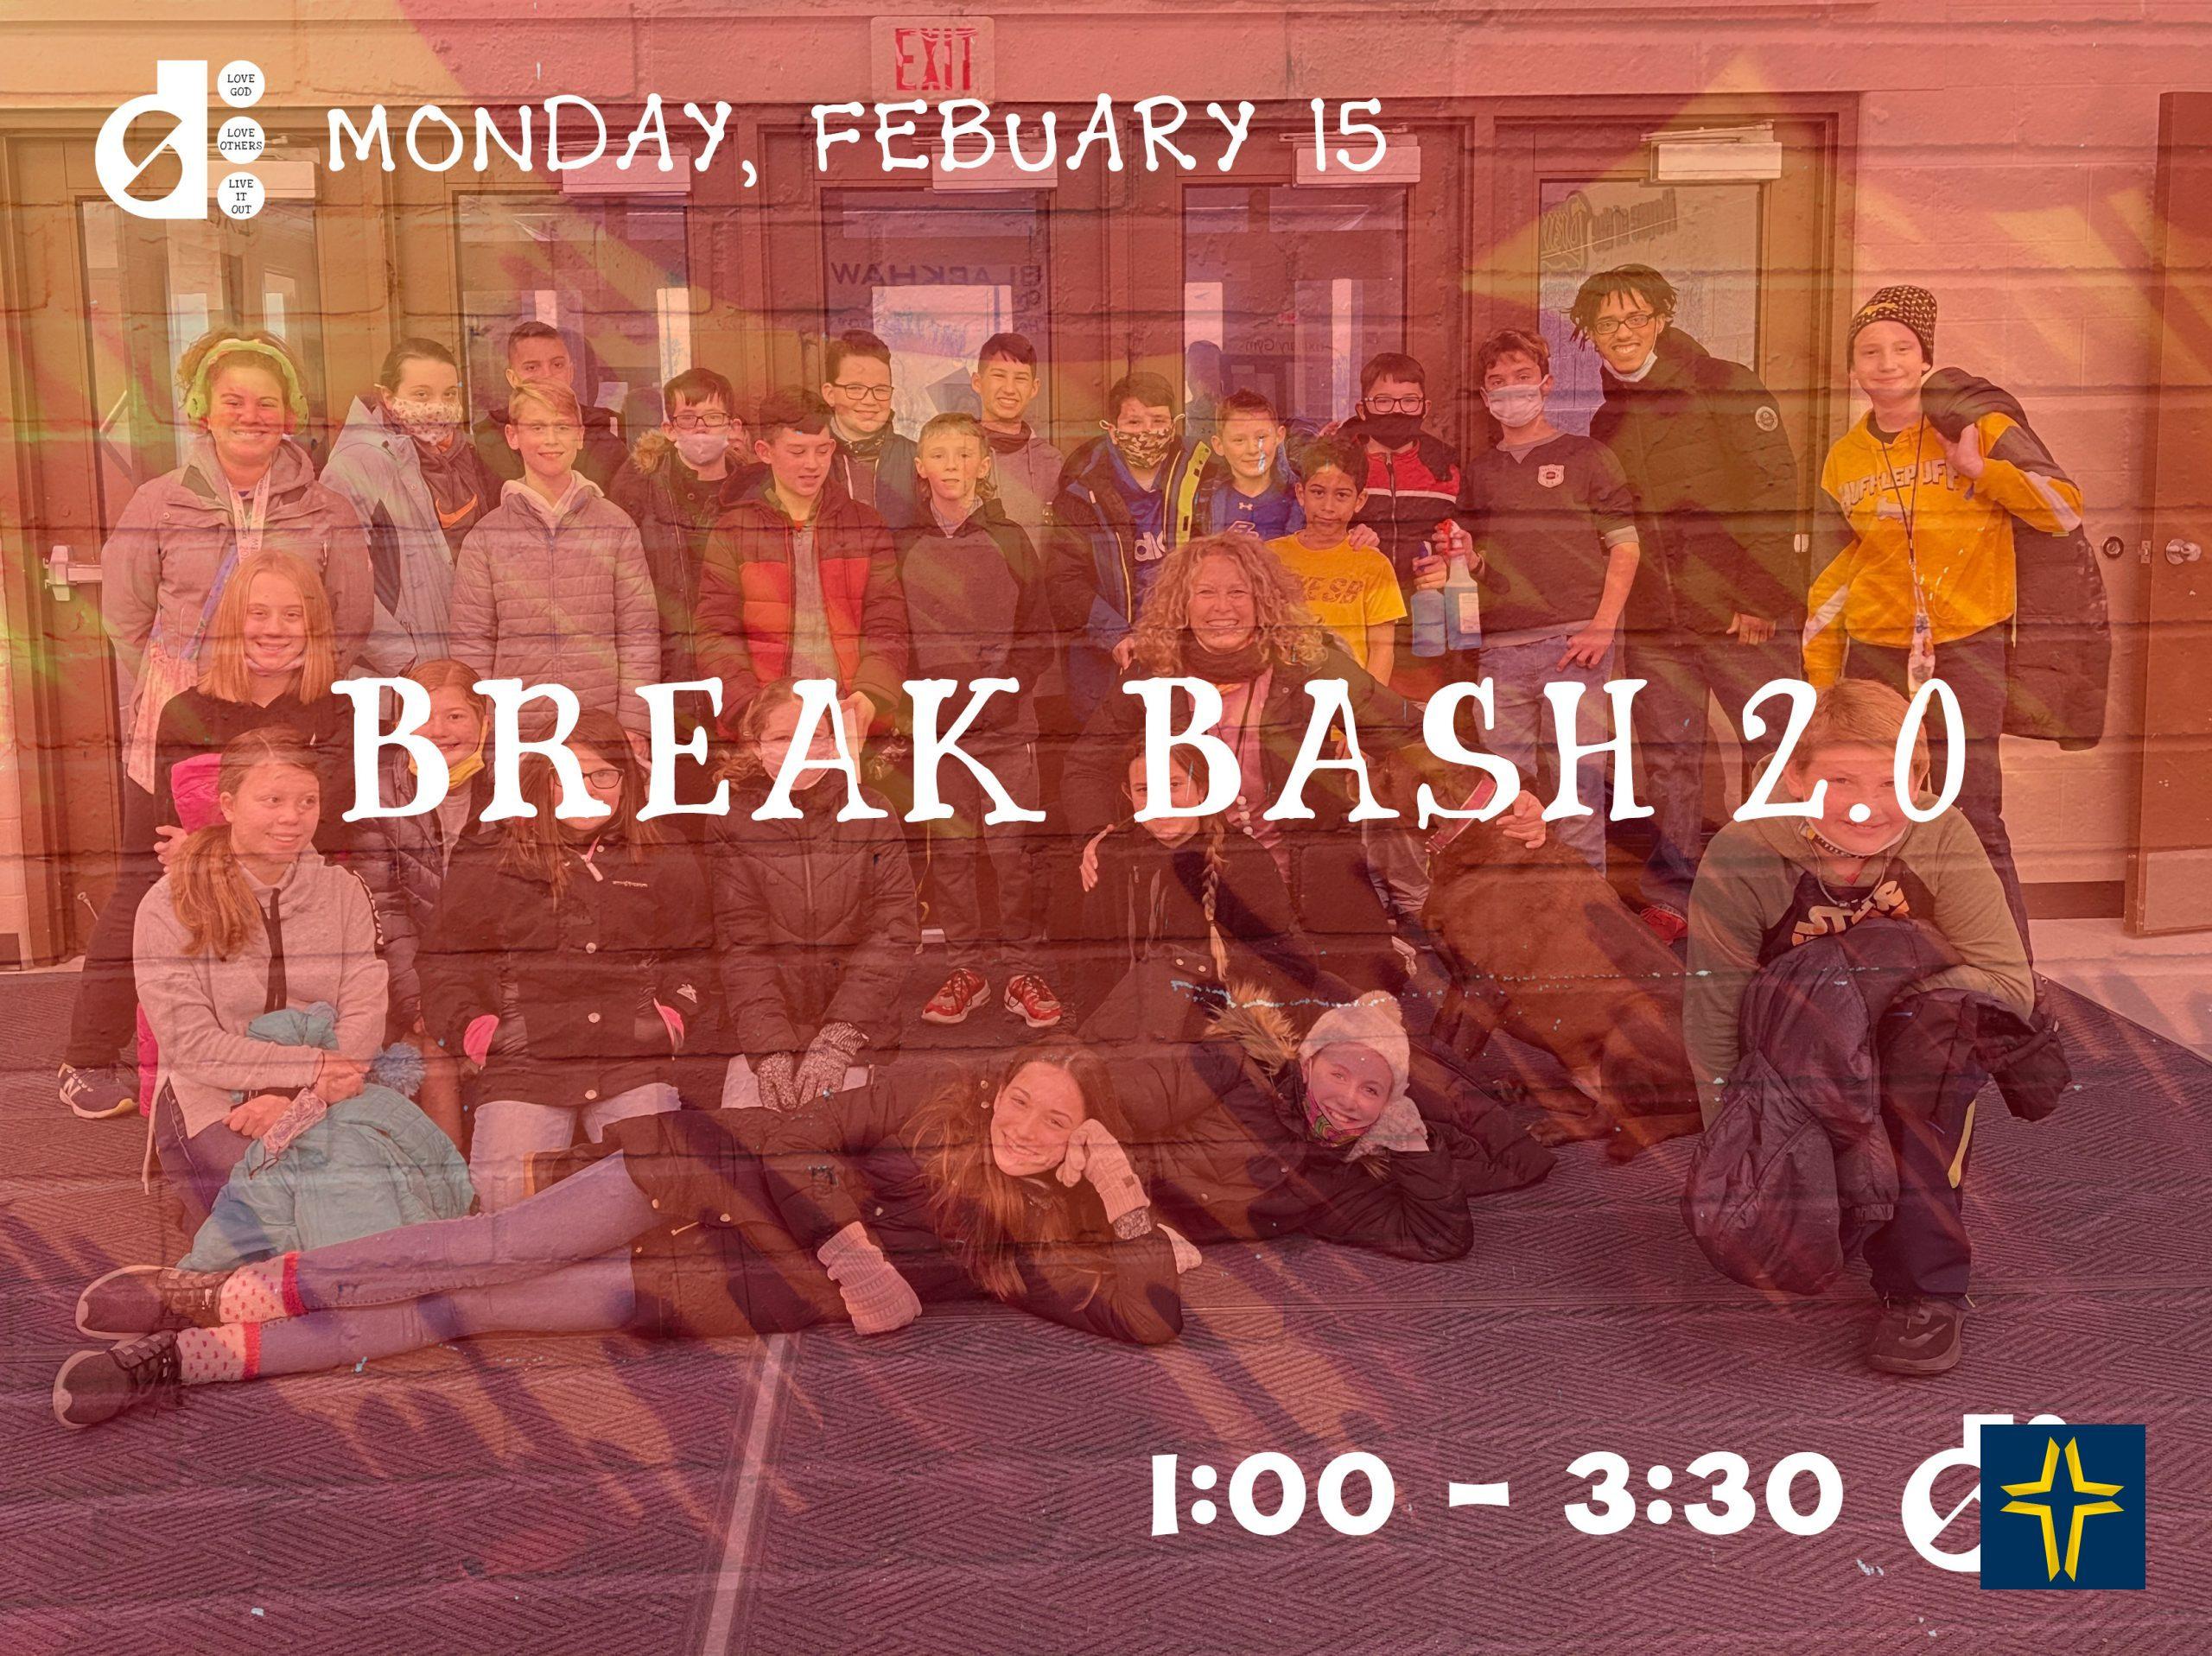 DS3 Break Bash 2.0 – February 15 @ 1:00 – 3:00 pm